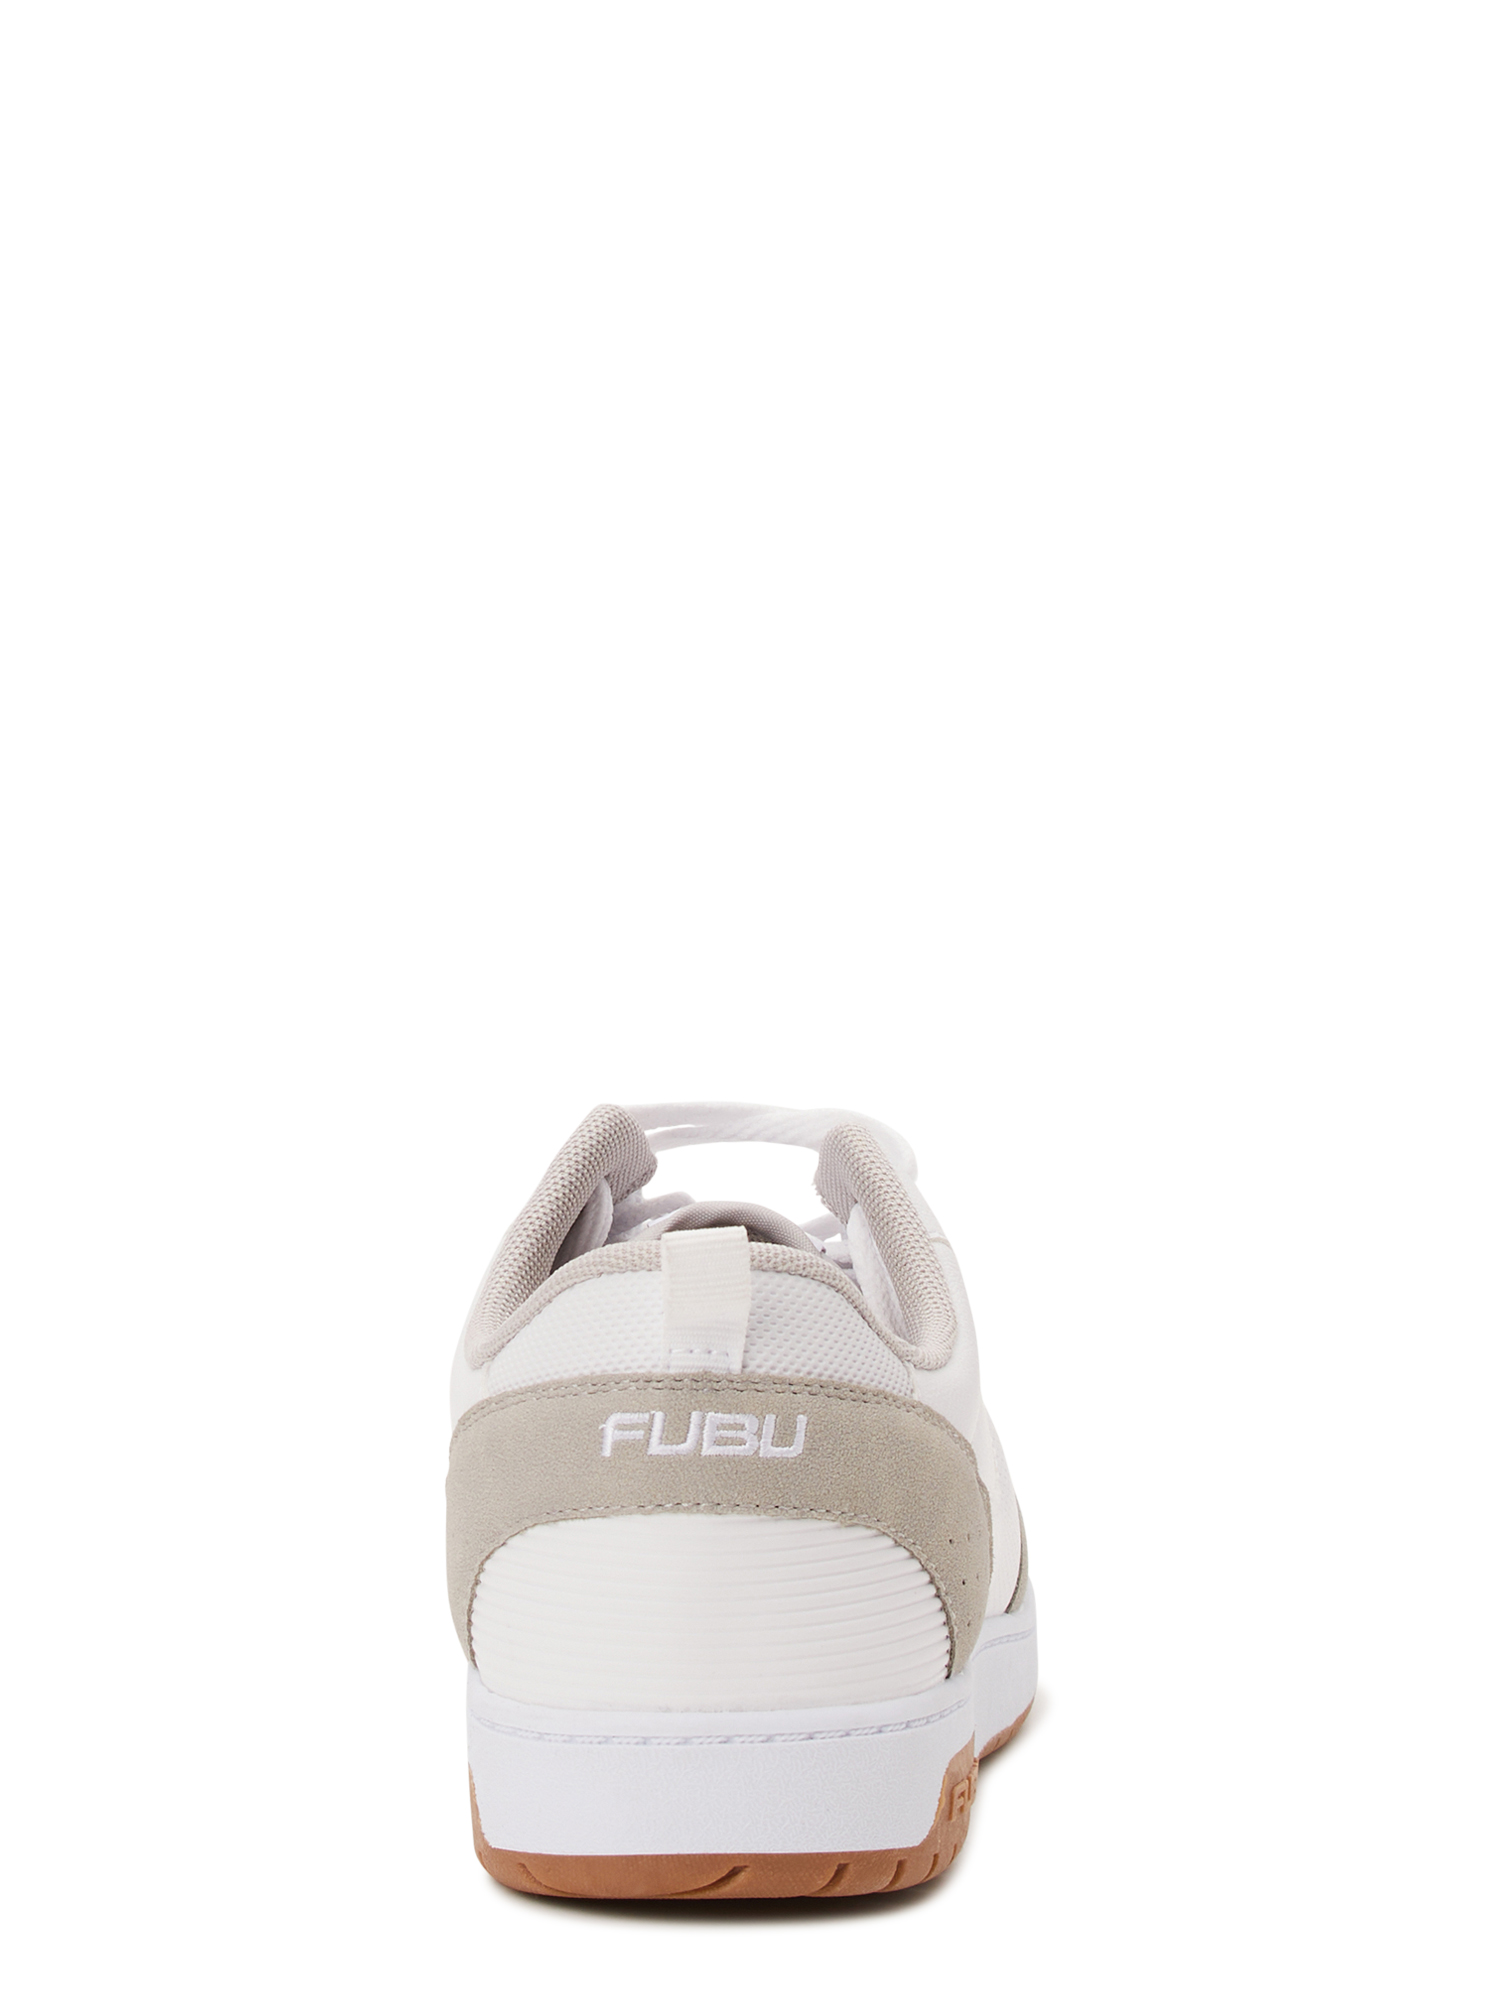 FUBU Little & Big Boys Half Court Low Top Sneakers, Sizes 13-6 - image 3 of 5